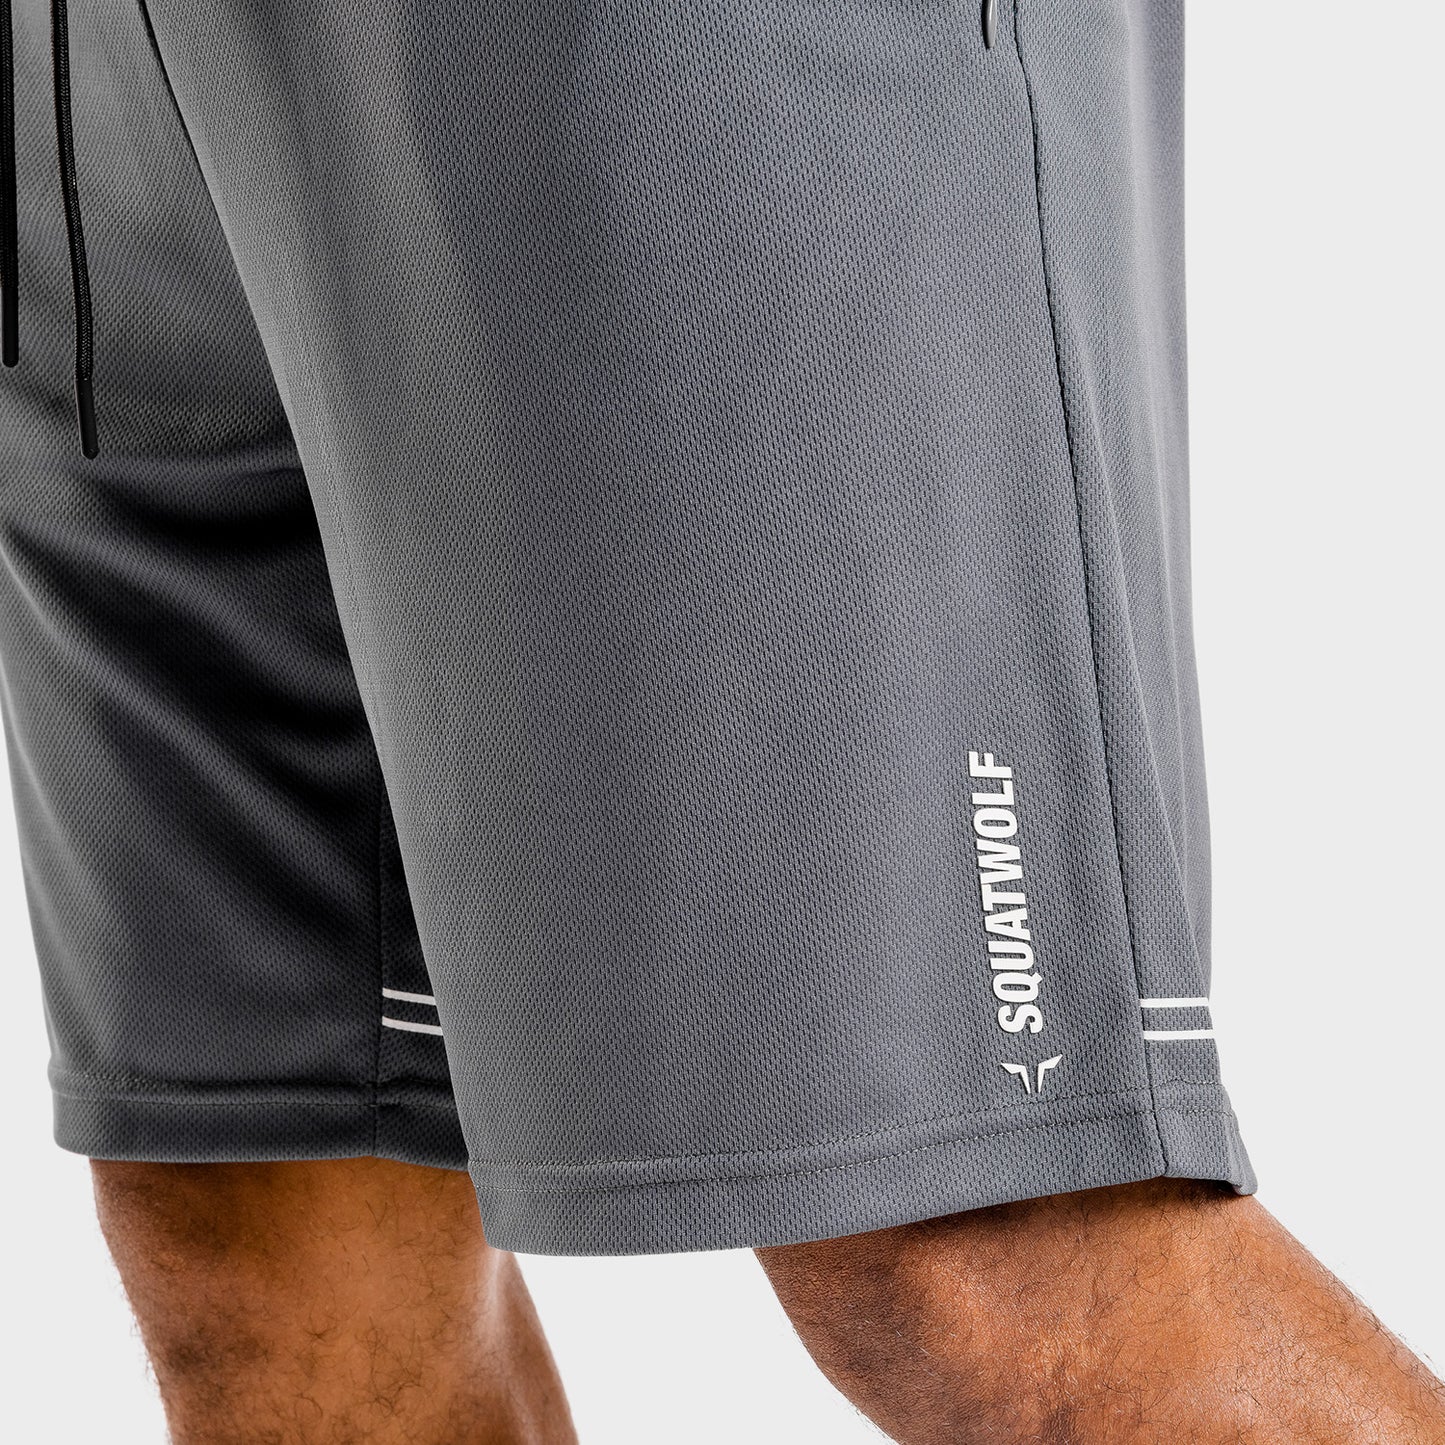 squatwolf-workout-short-for-men-flux-basketball-shorts-charcoal-gym-wear